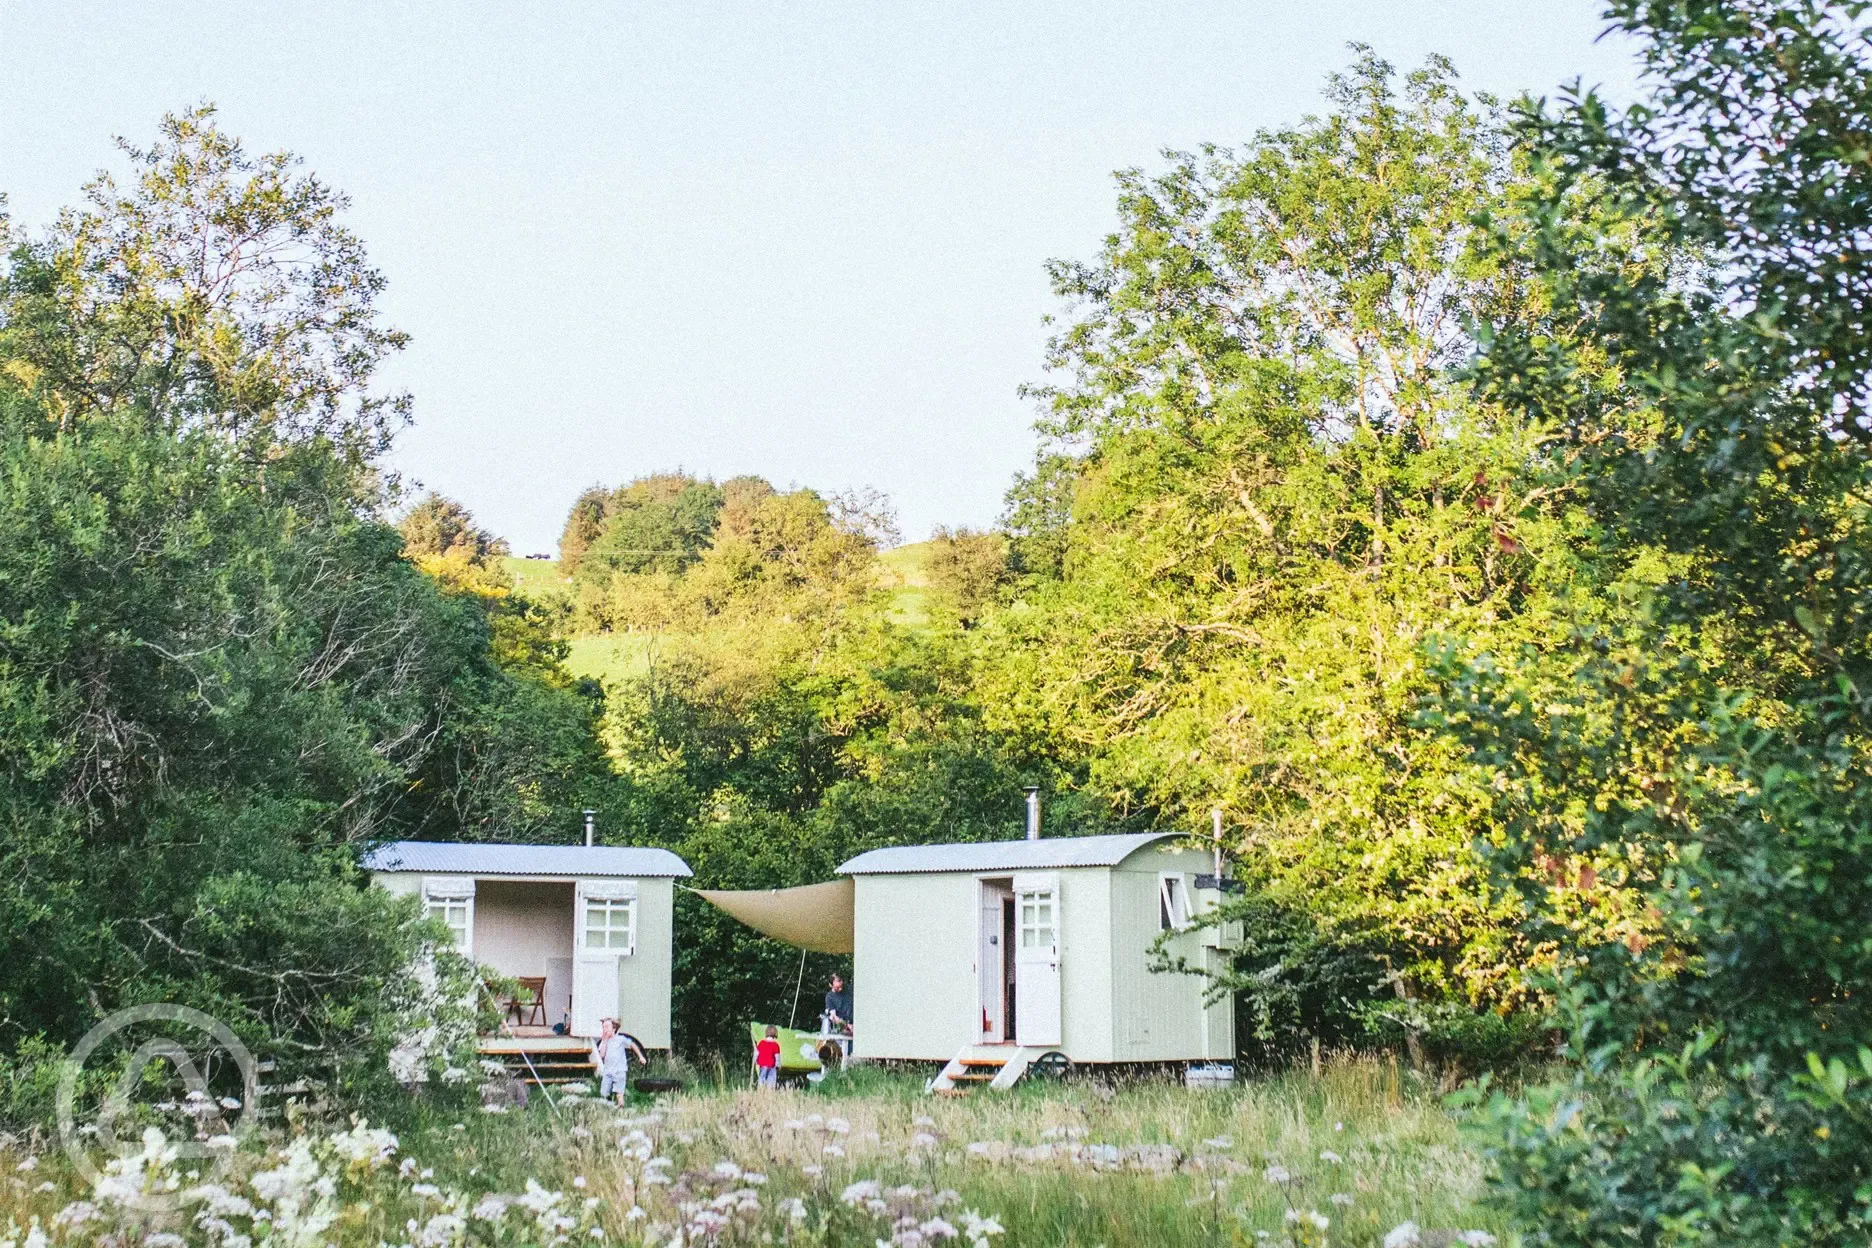 Shepherds' huts with wildflower meadow